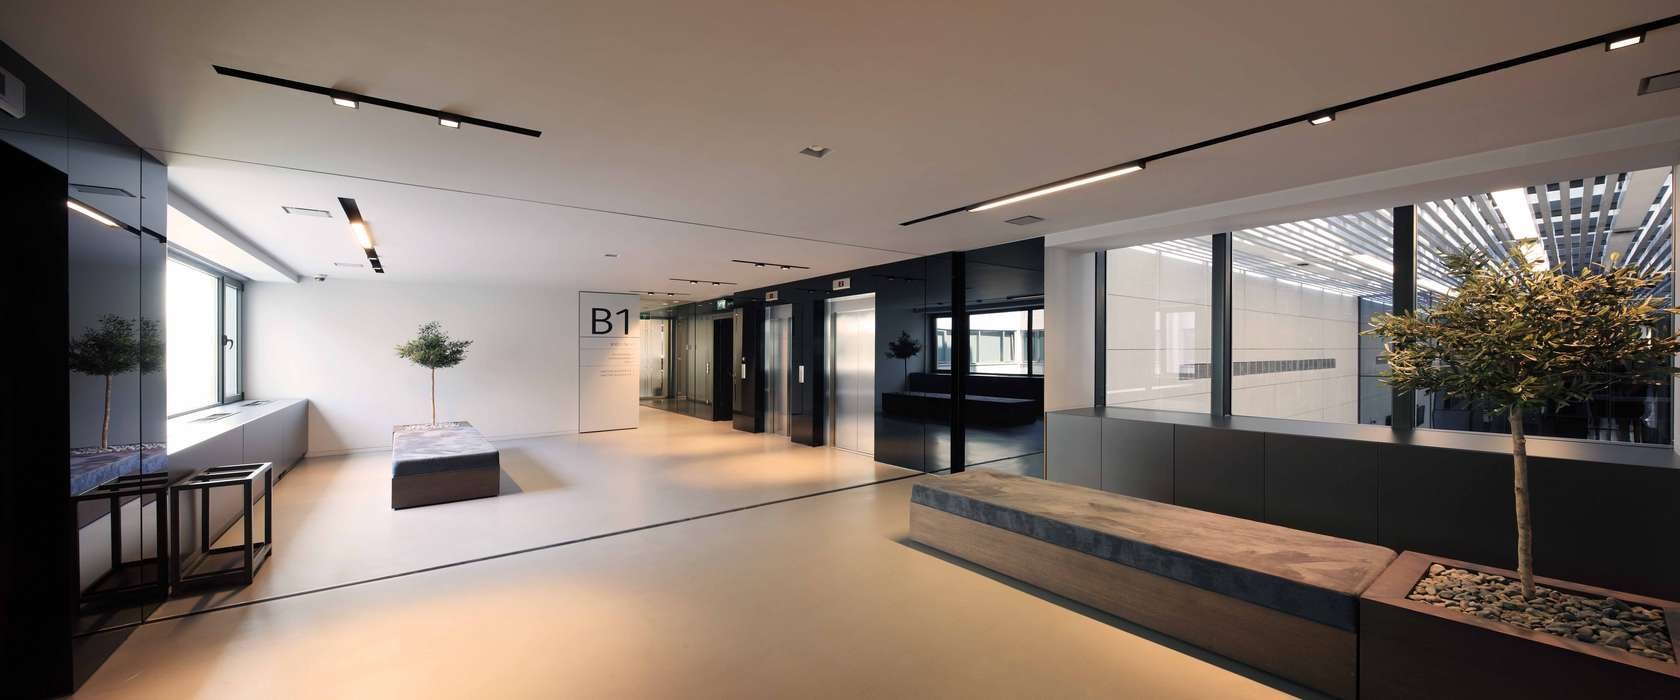 Z North Studio - Commercial & Residential Interior Design - Office - zn-s (70).jpg